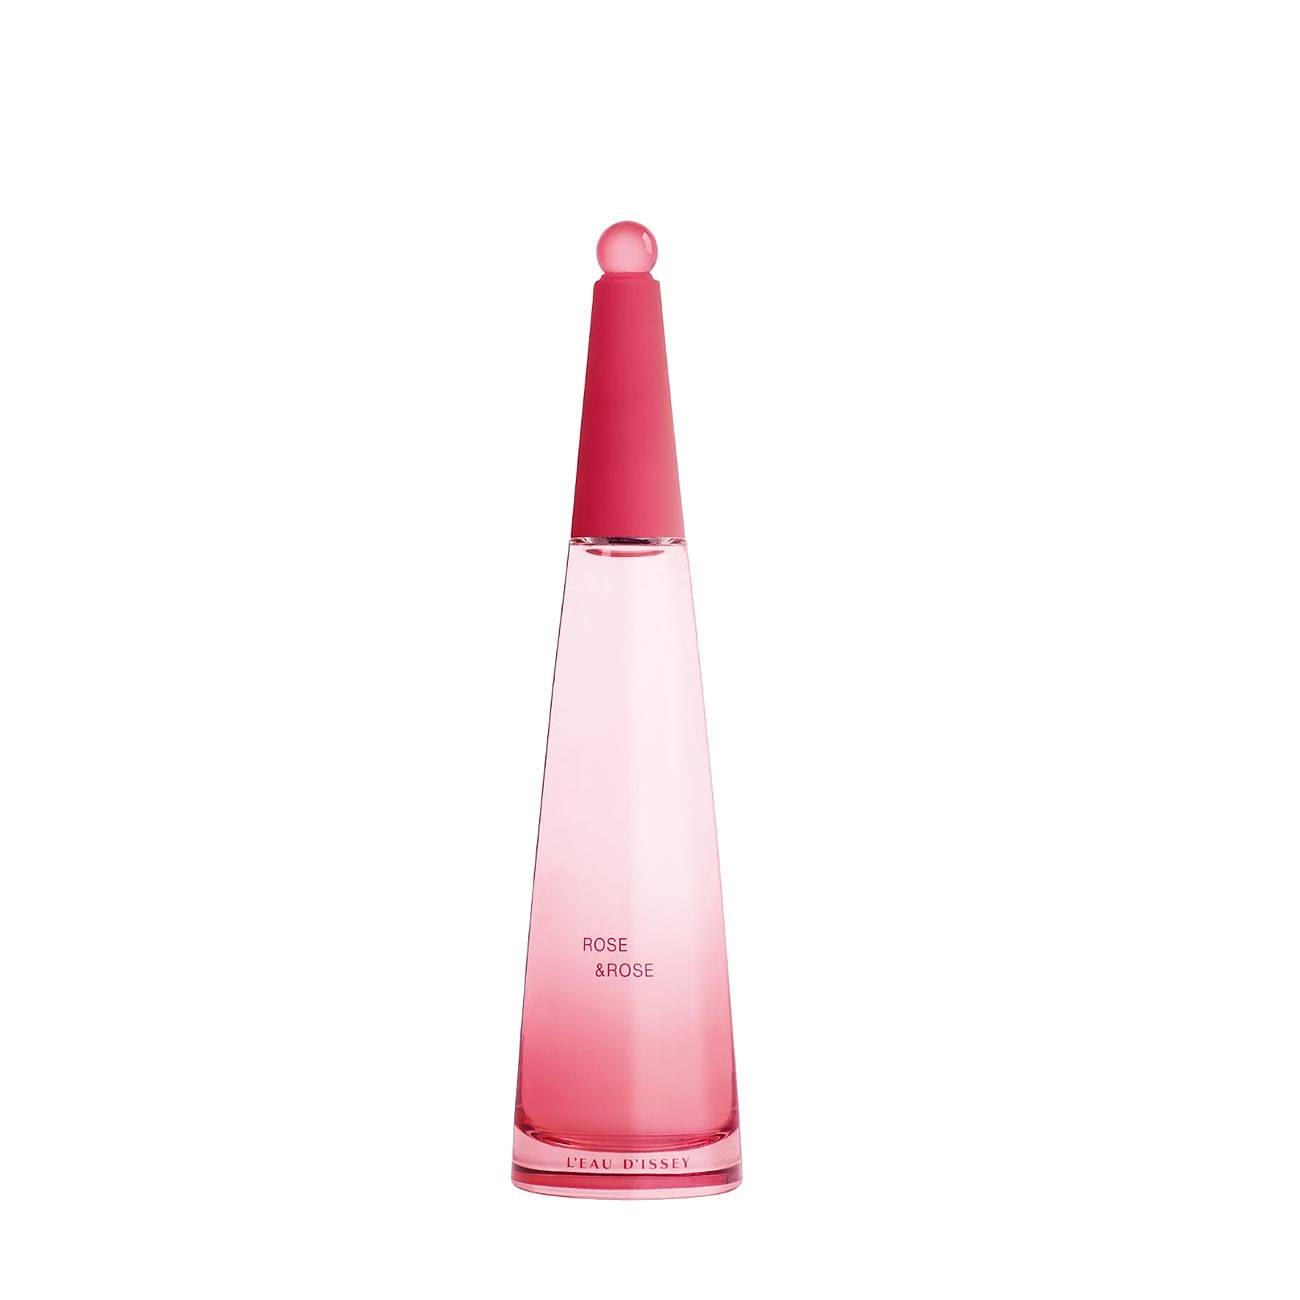 Apa de Parfum Issey Miyake L'EAU D'ISSEY ROSE & ROSE 90ml cu comanda online